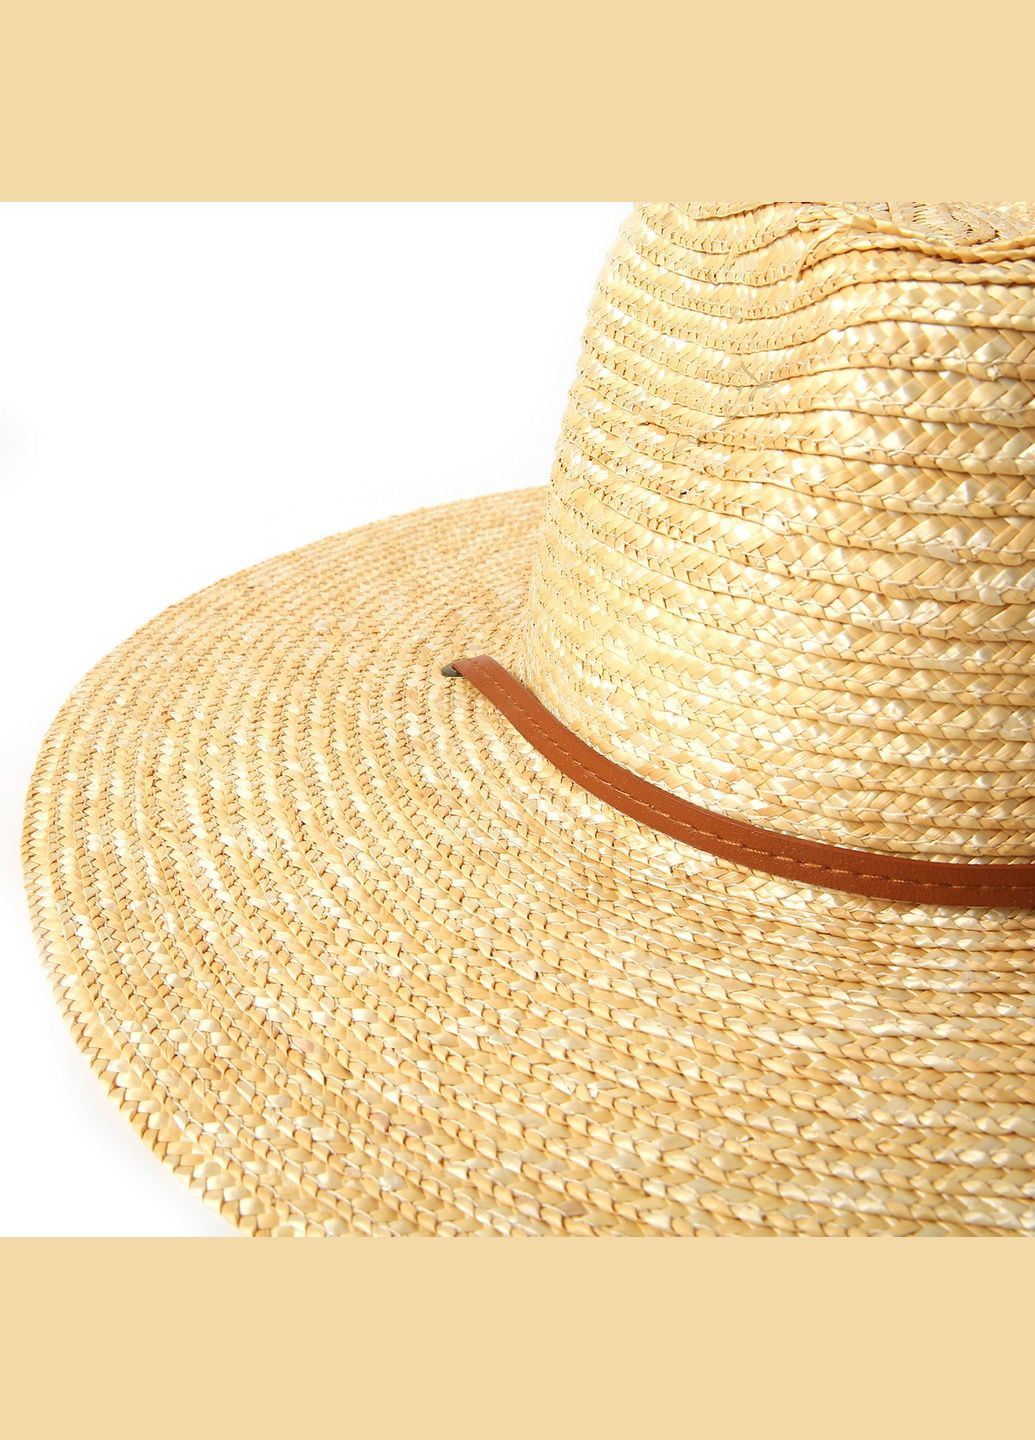 Шляпа федора мужская солома бежевая MADELINE 844-187 LuckyLOOK 844-187м (289478393)